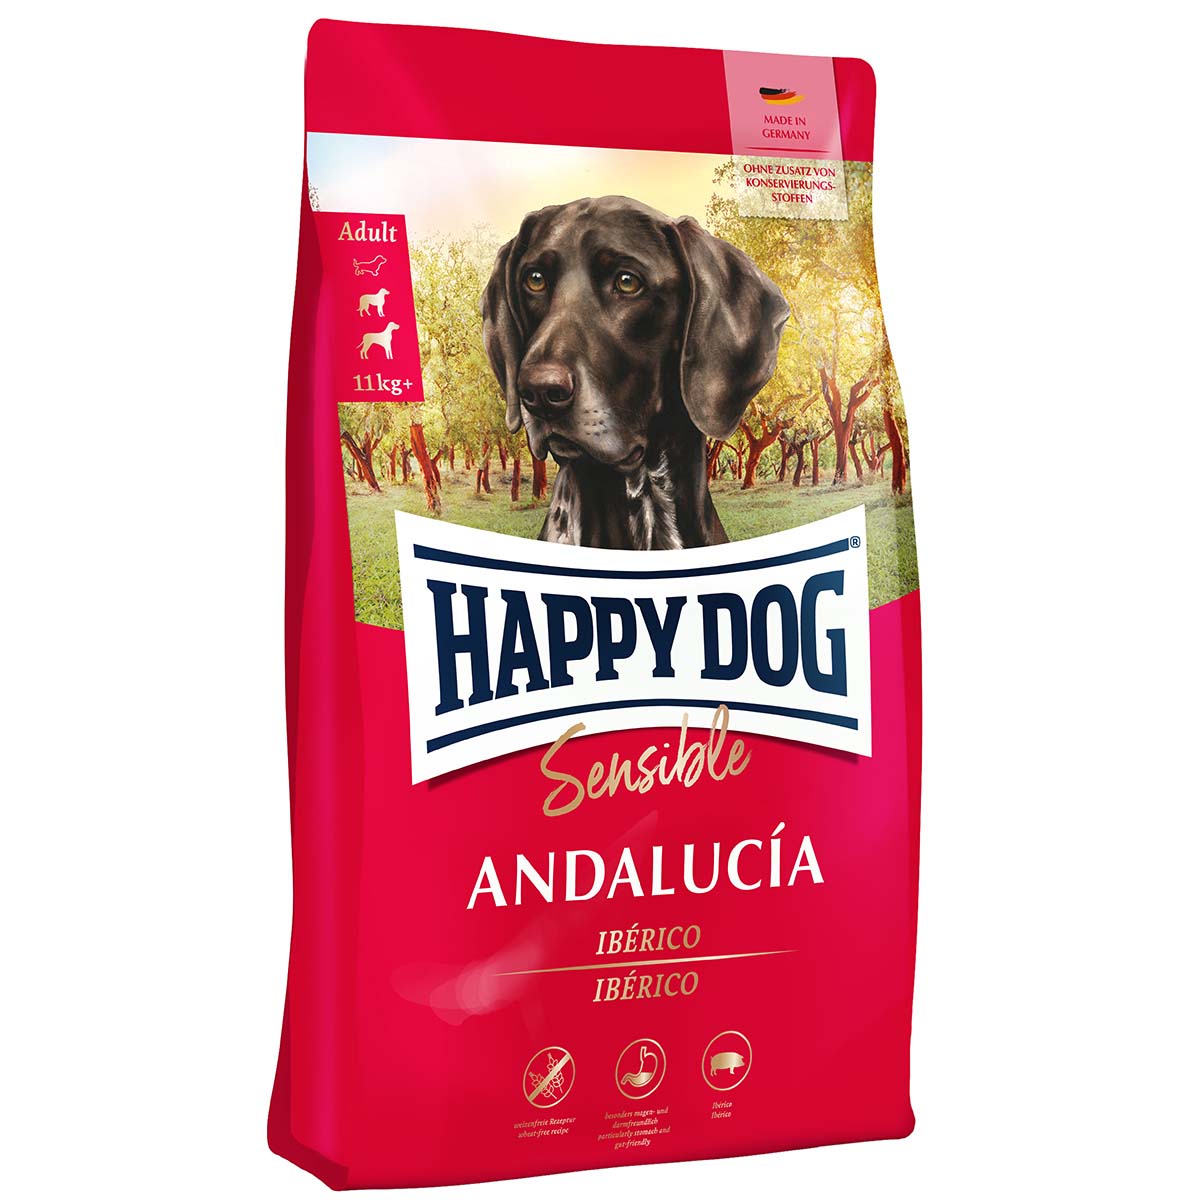 Happy Dog Supreme Sensible Andalucía 11kg von Happy Dog